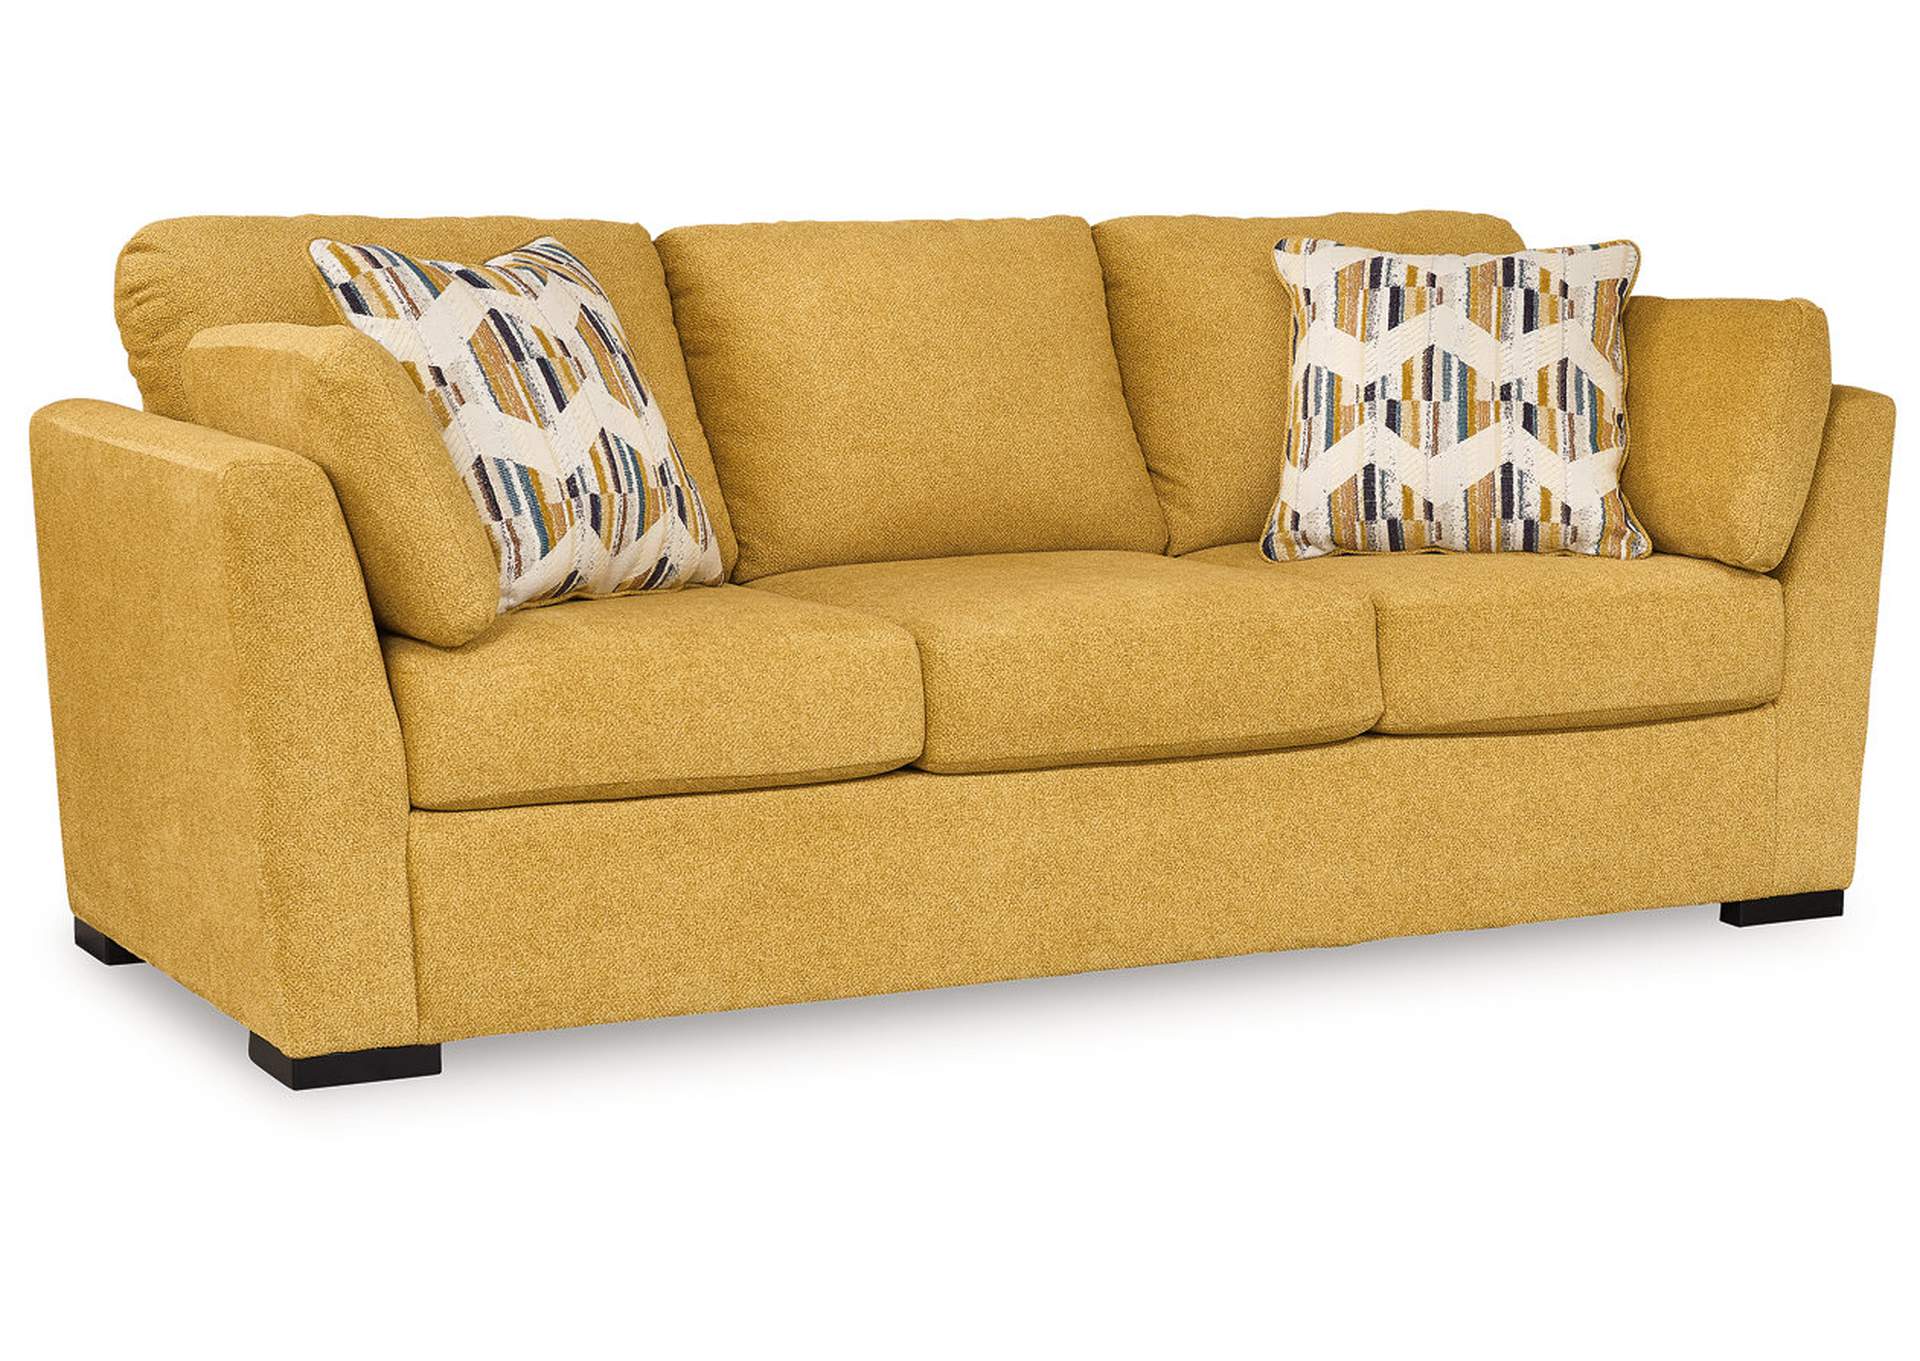 Keerwick Sofa,Signature Design By Ashley